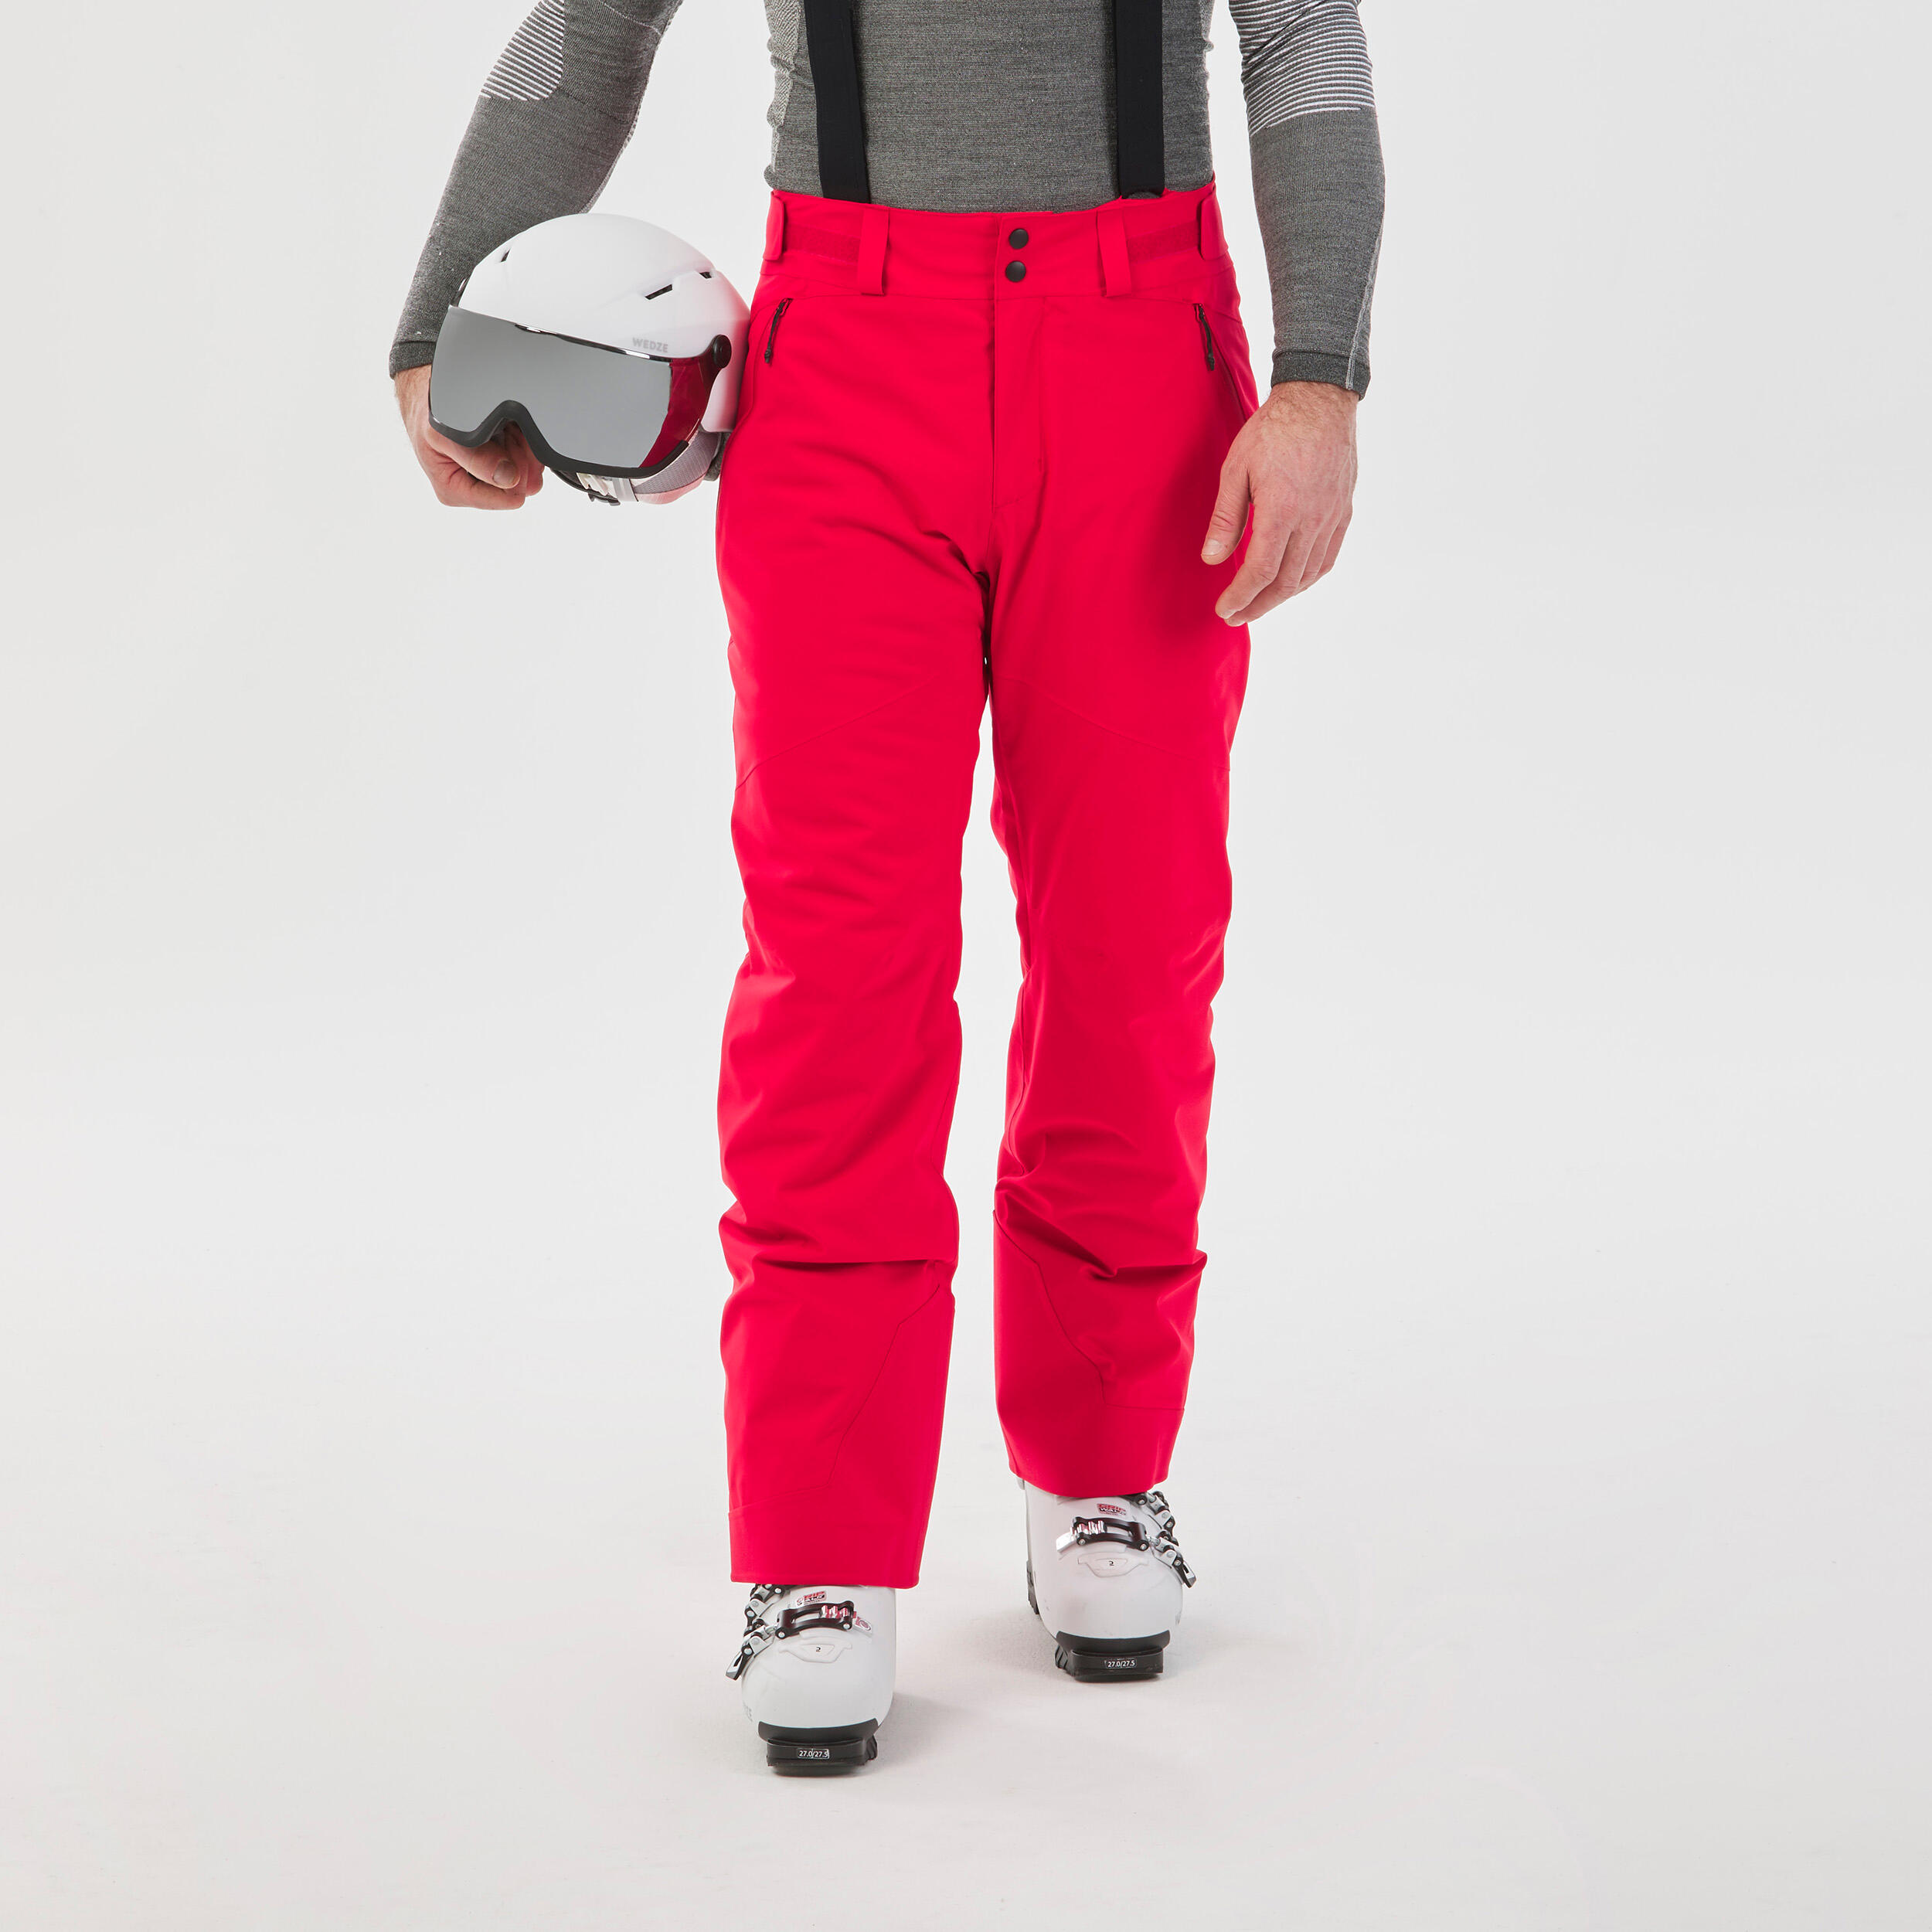 Men's Warm Ski Trousers - 580 - Red 2/11